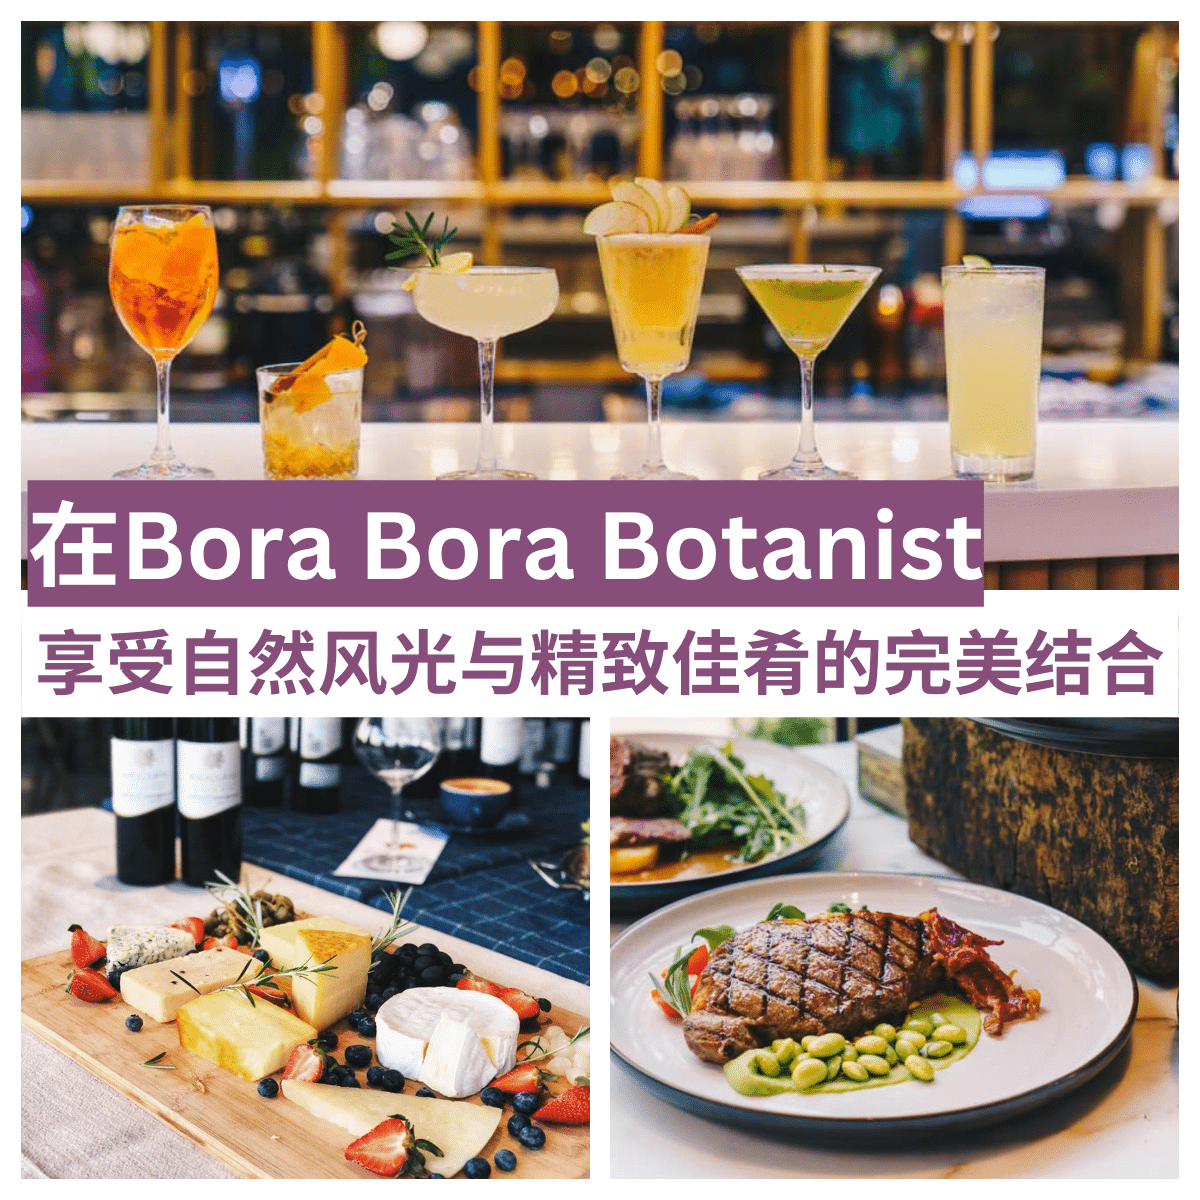 ” Bora Bora Botanist ：东海岸的美食天堂，体验自然与美味的完美结合。”